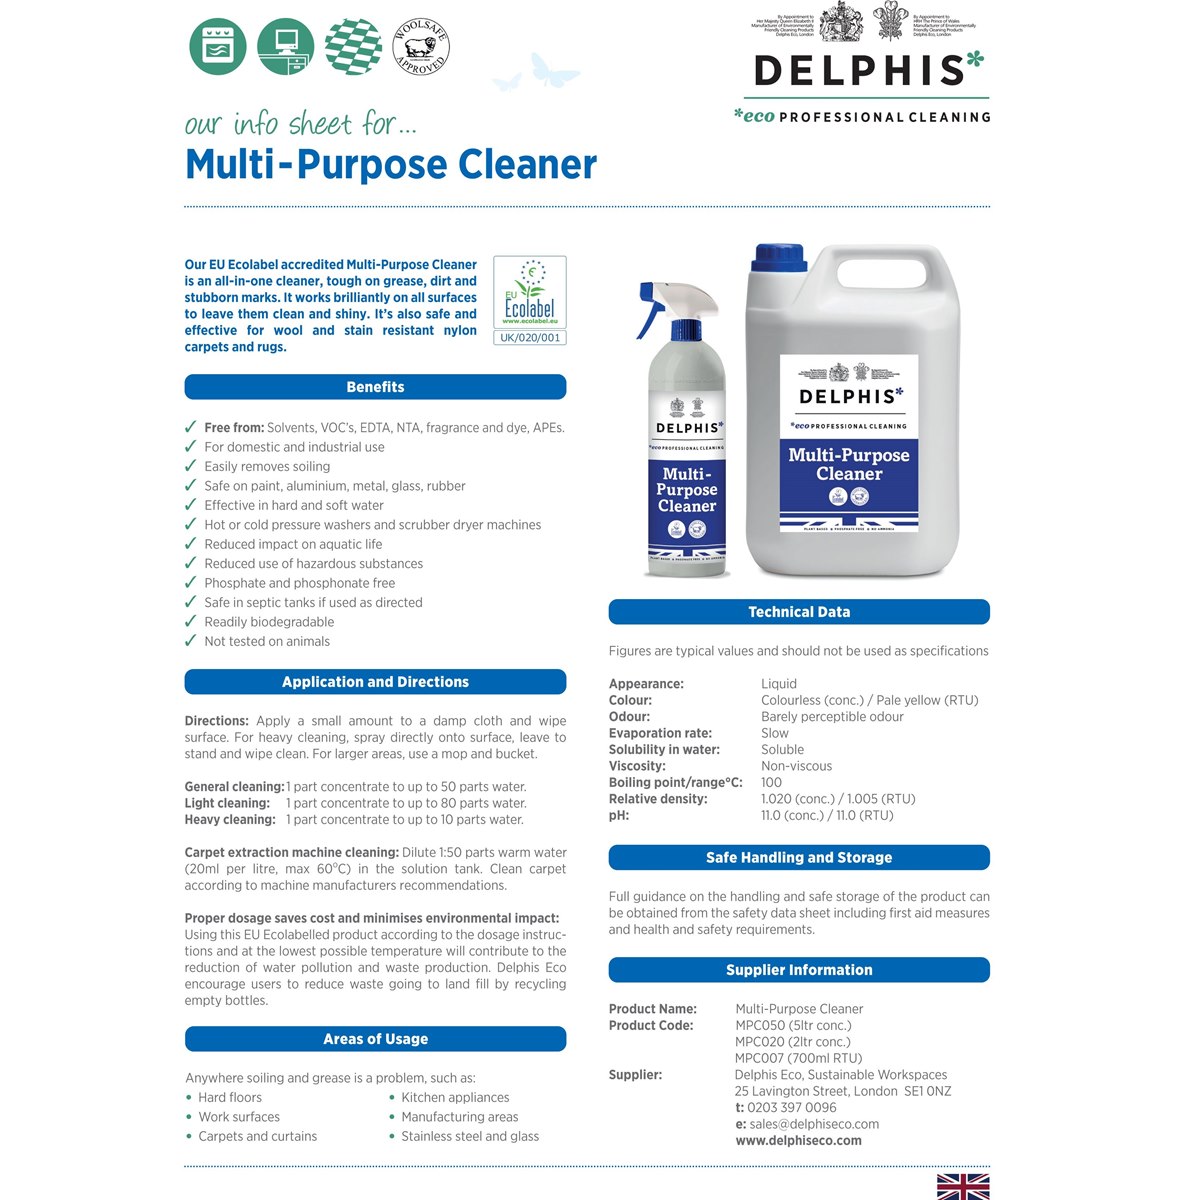 Dephis-Multi-Purpose-Cleaner-Information-Sheet